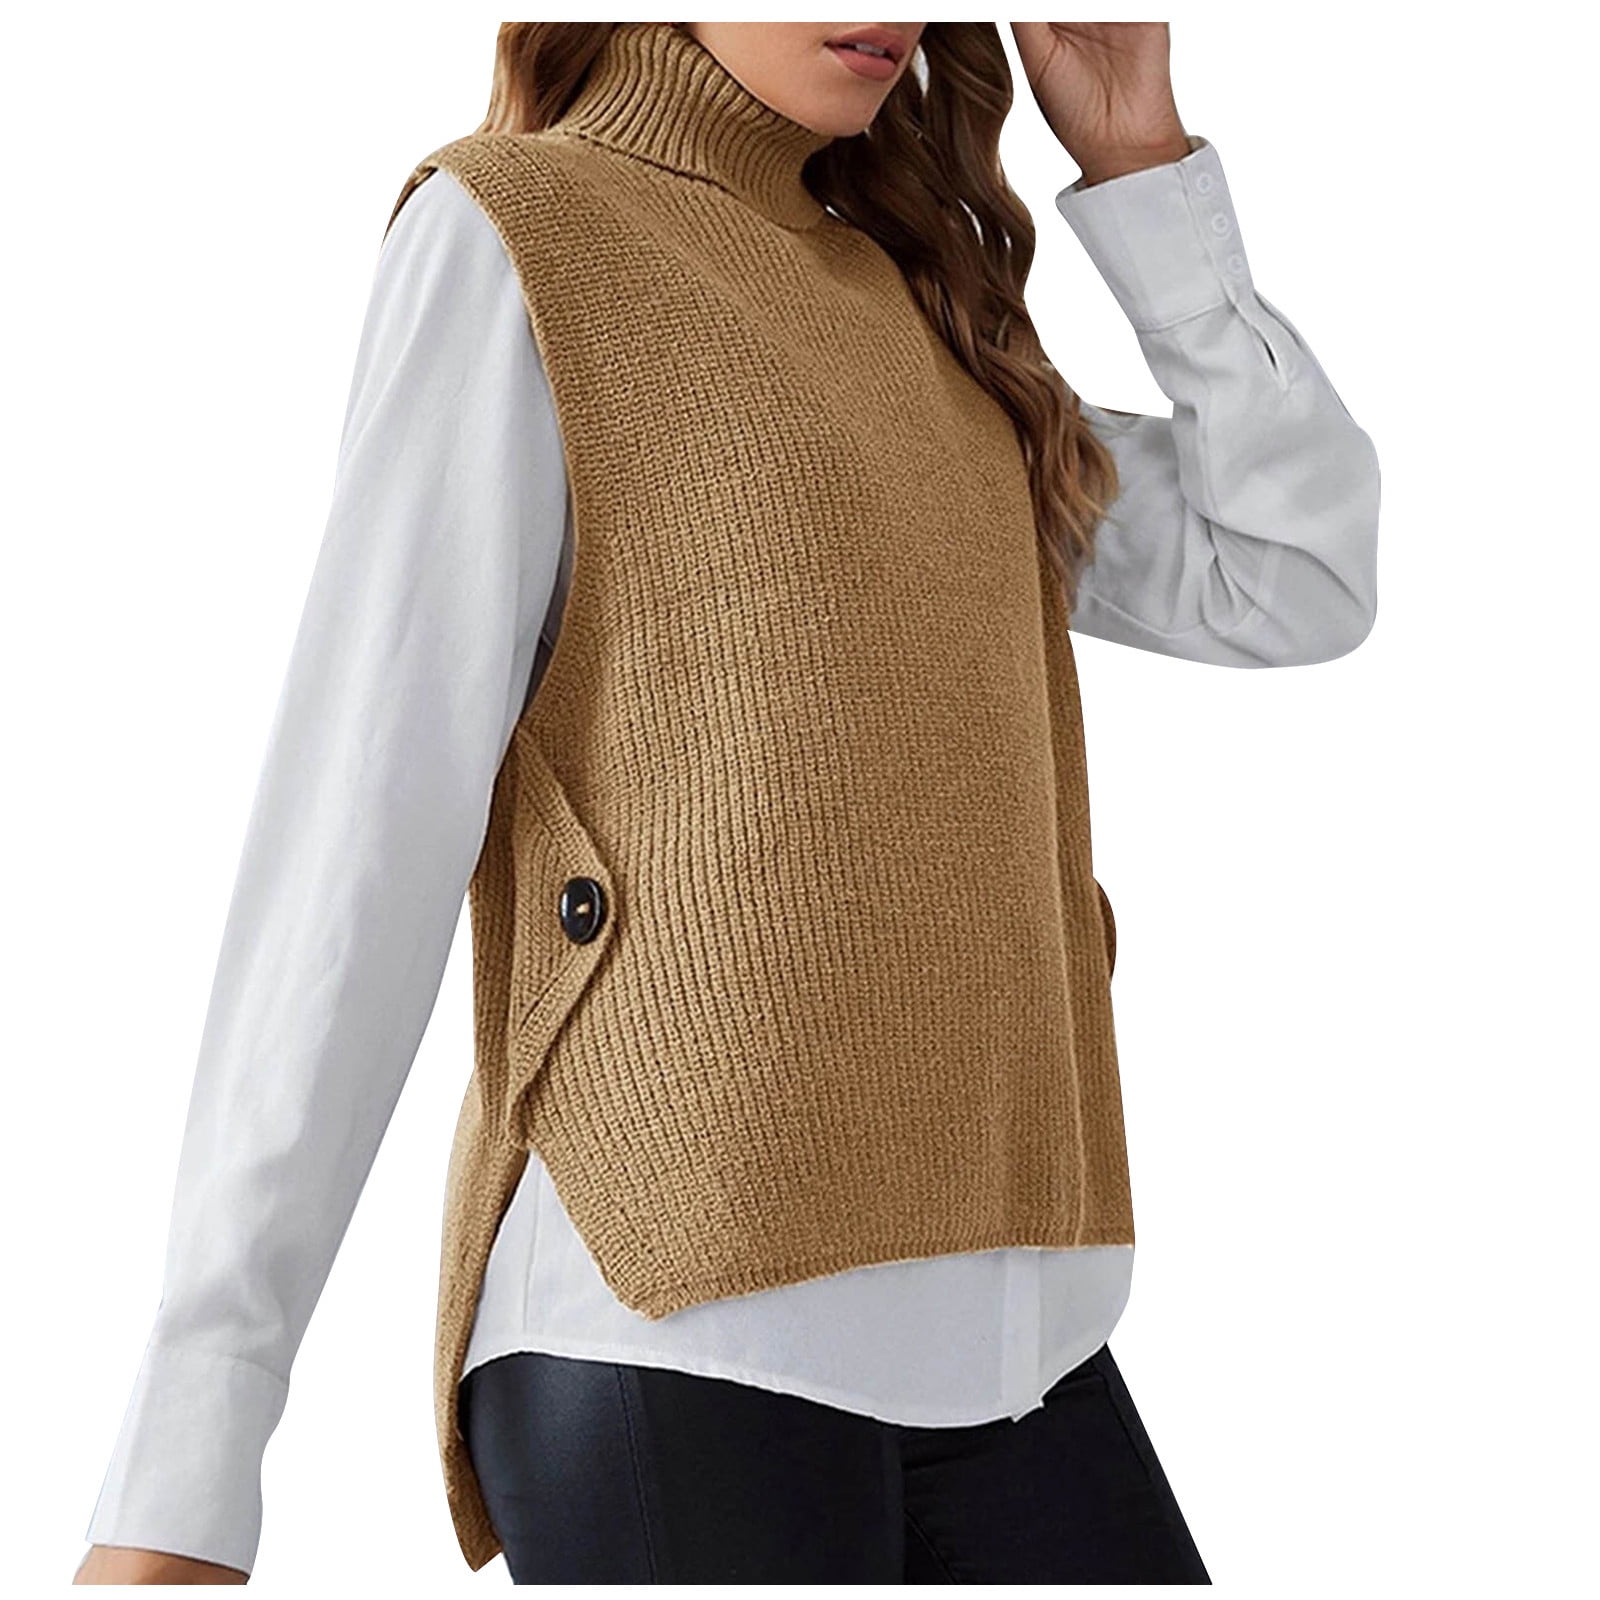 Women's Mock Turtleneck Sweater Vest Sleeveless Loose High Low